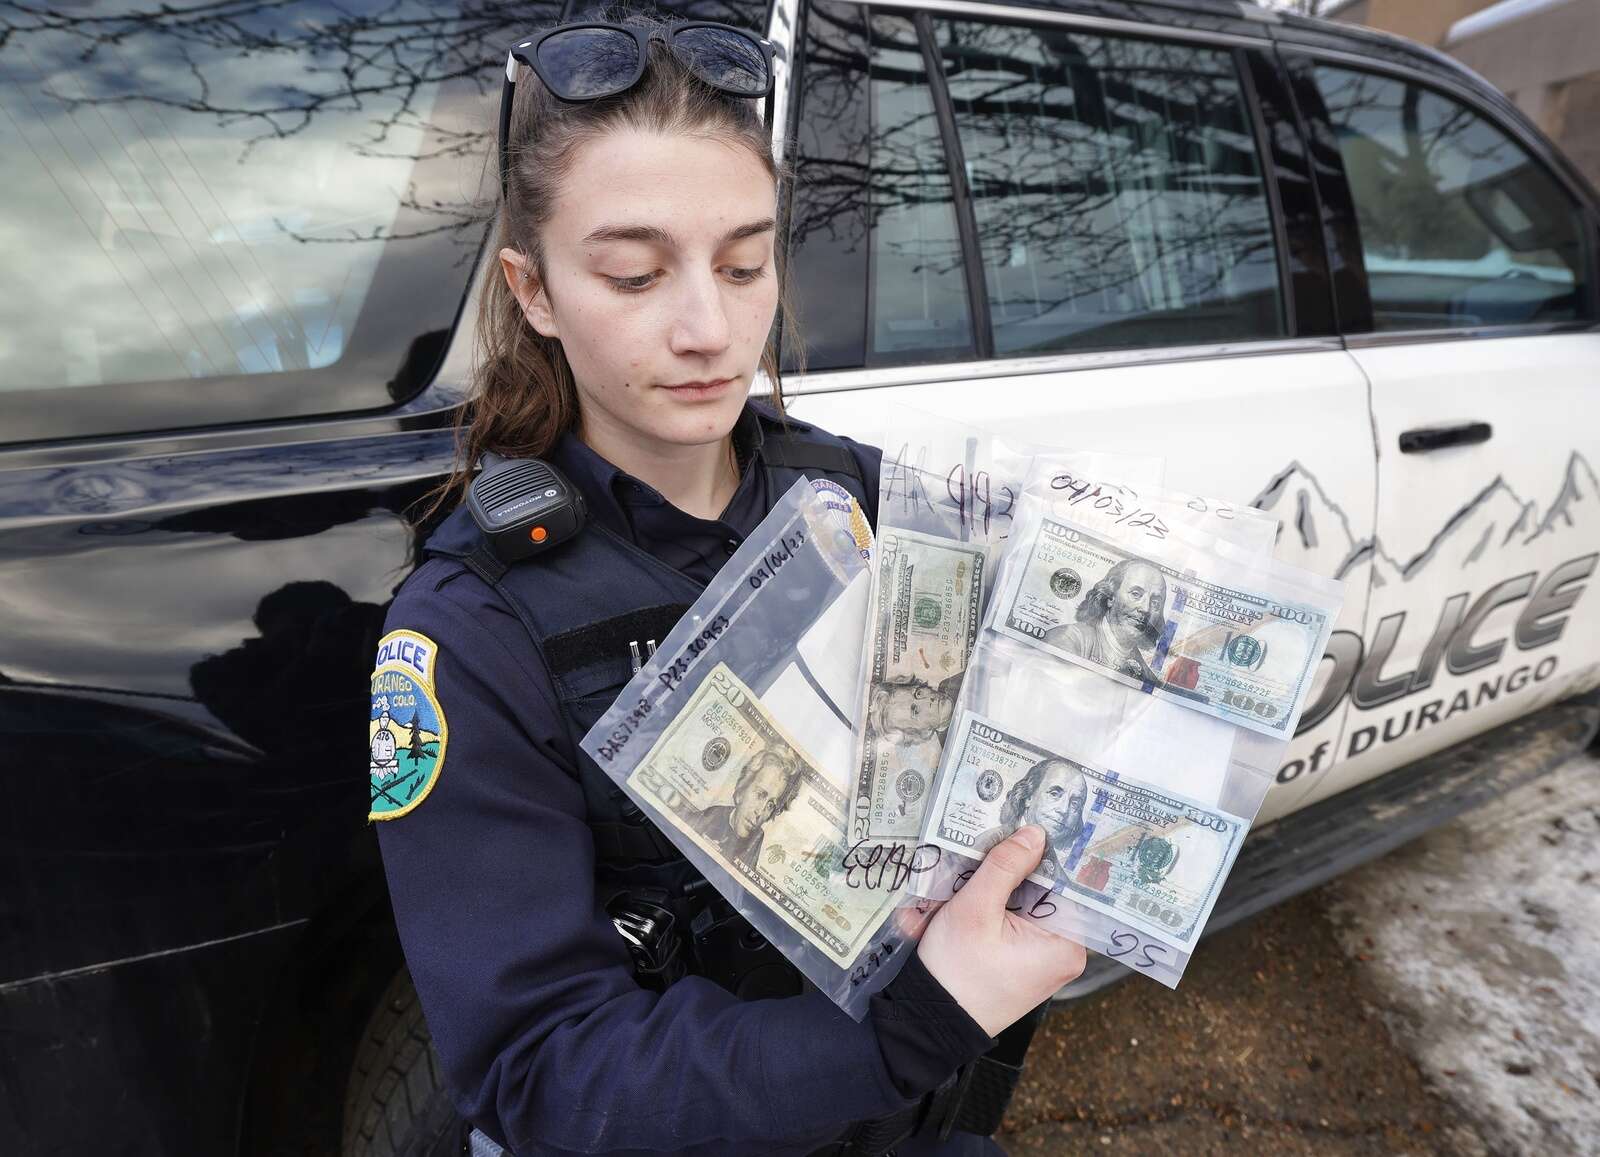 Durango police follow the (fake) money – The Durango Herald - The Durango Herald